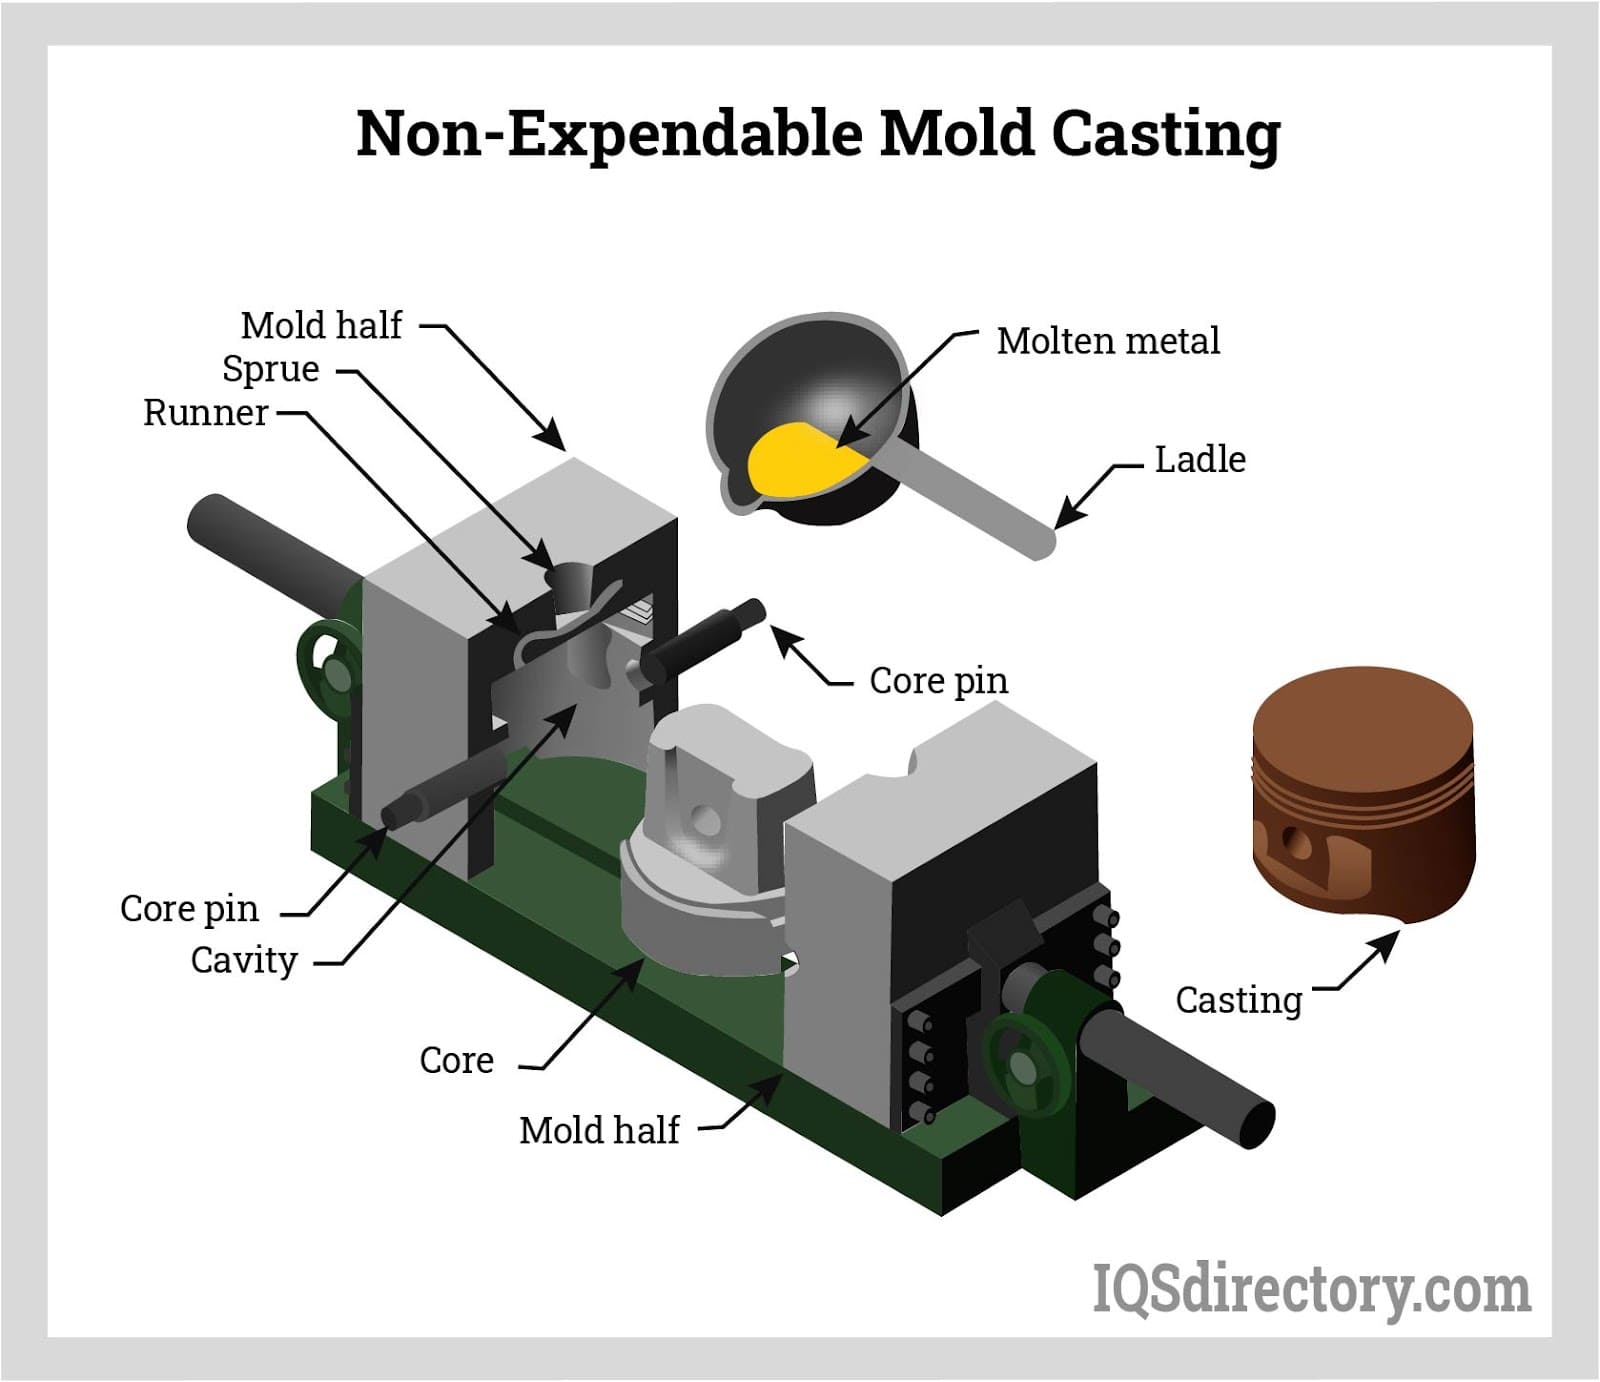 Non-expendable Mold Casting